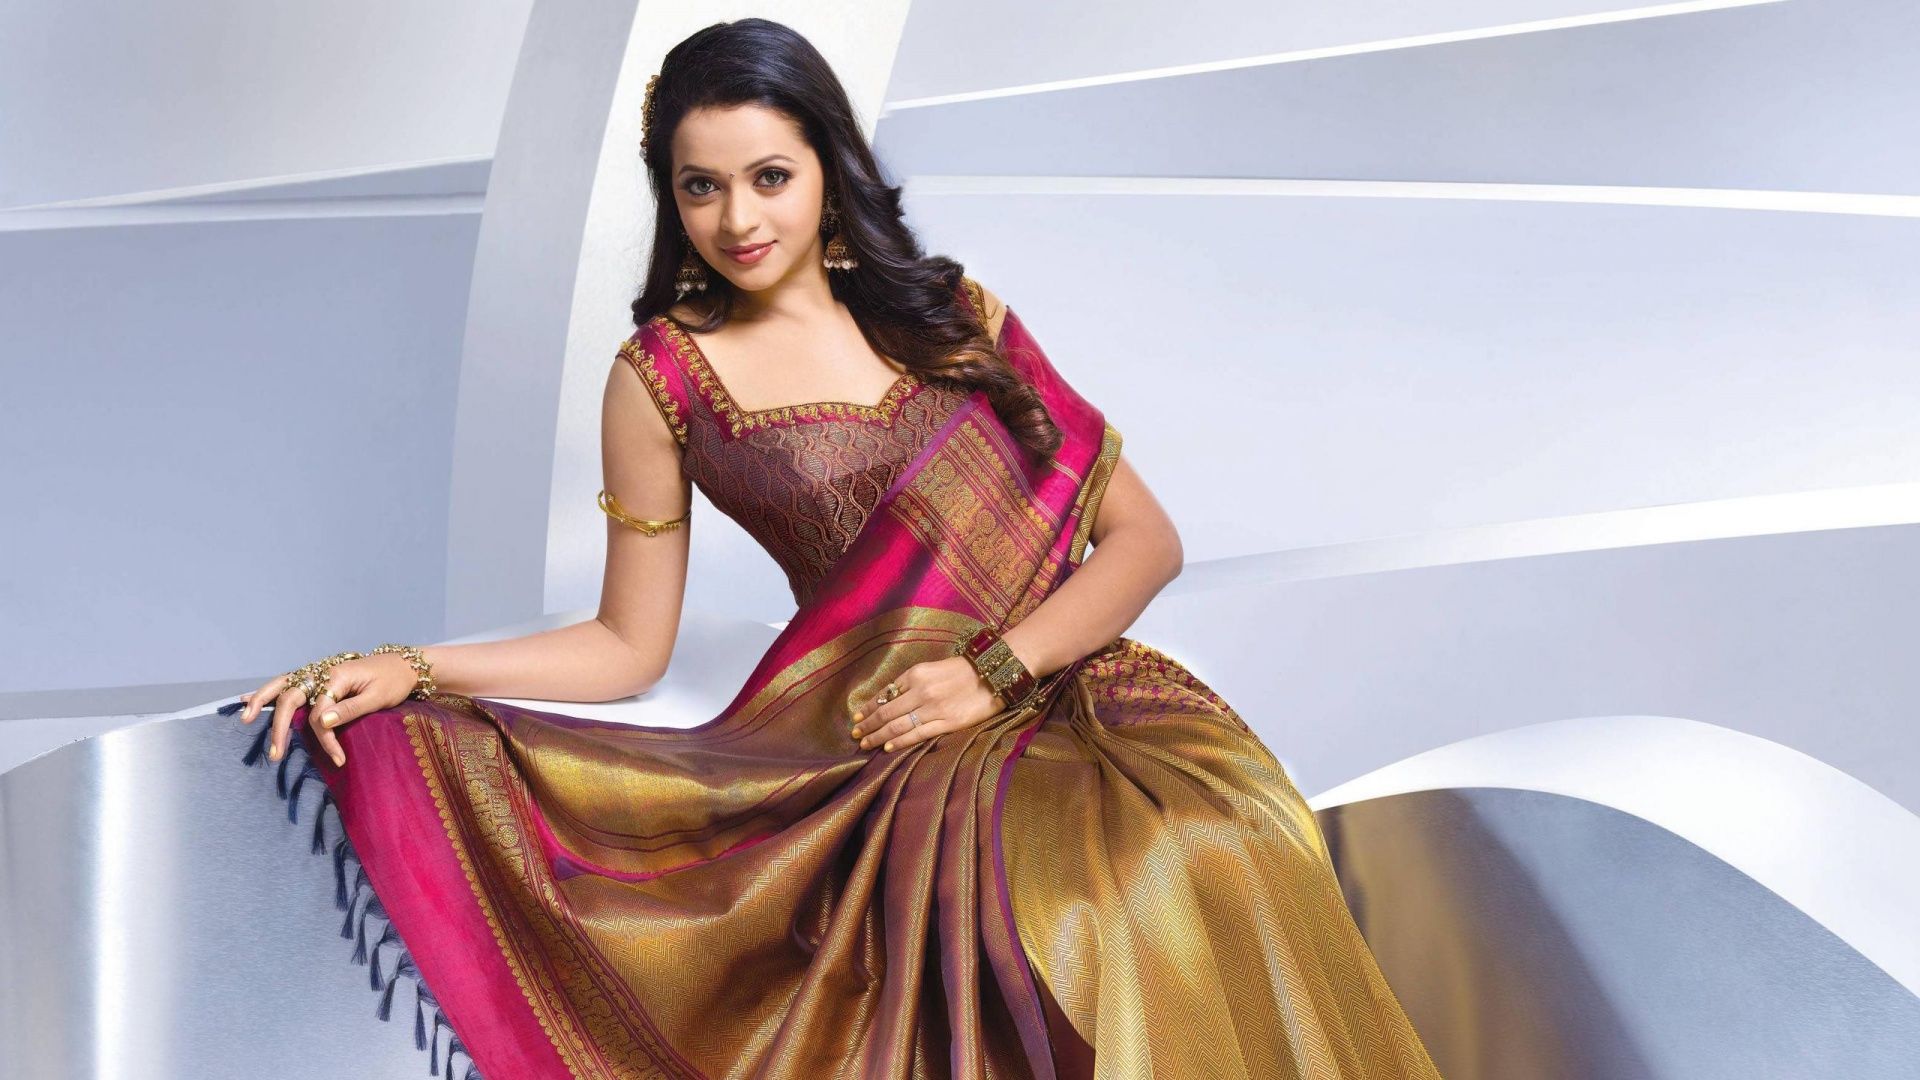 Beautiful Actress Bhavana Wallpaper in jpg format for free download